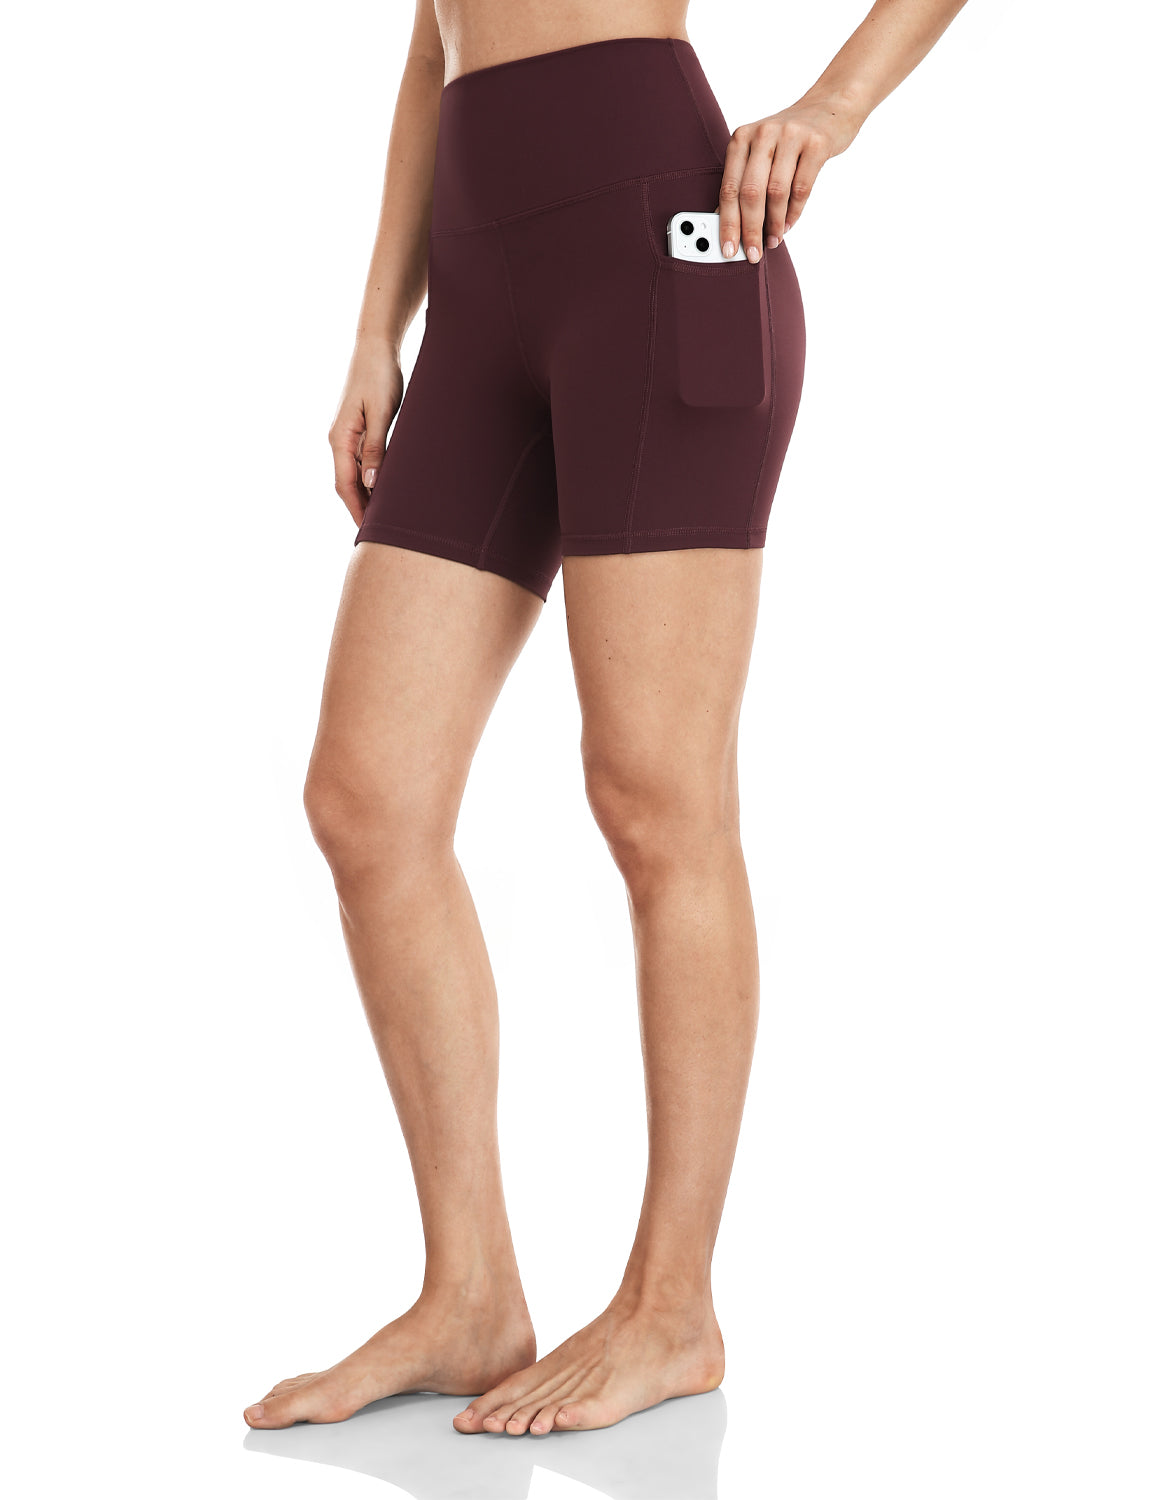 HeyNuts Essential Yoga Shorts 6'' Biker Shorts with Side Pockets